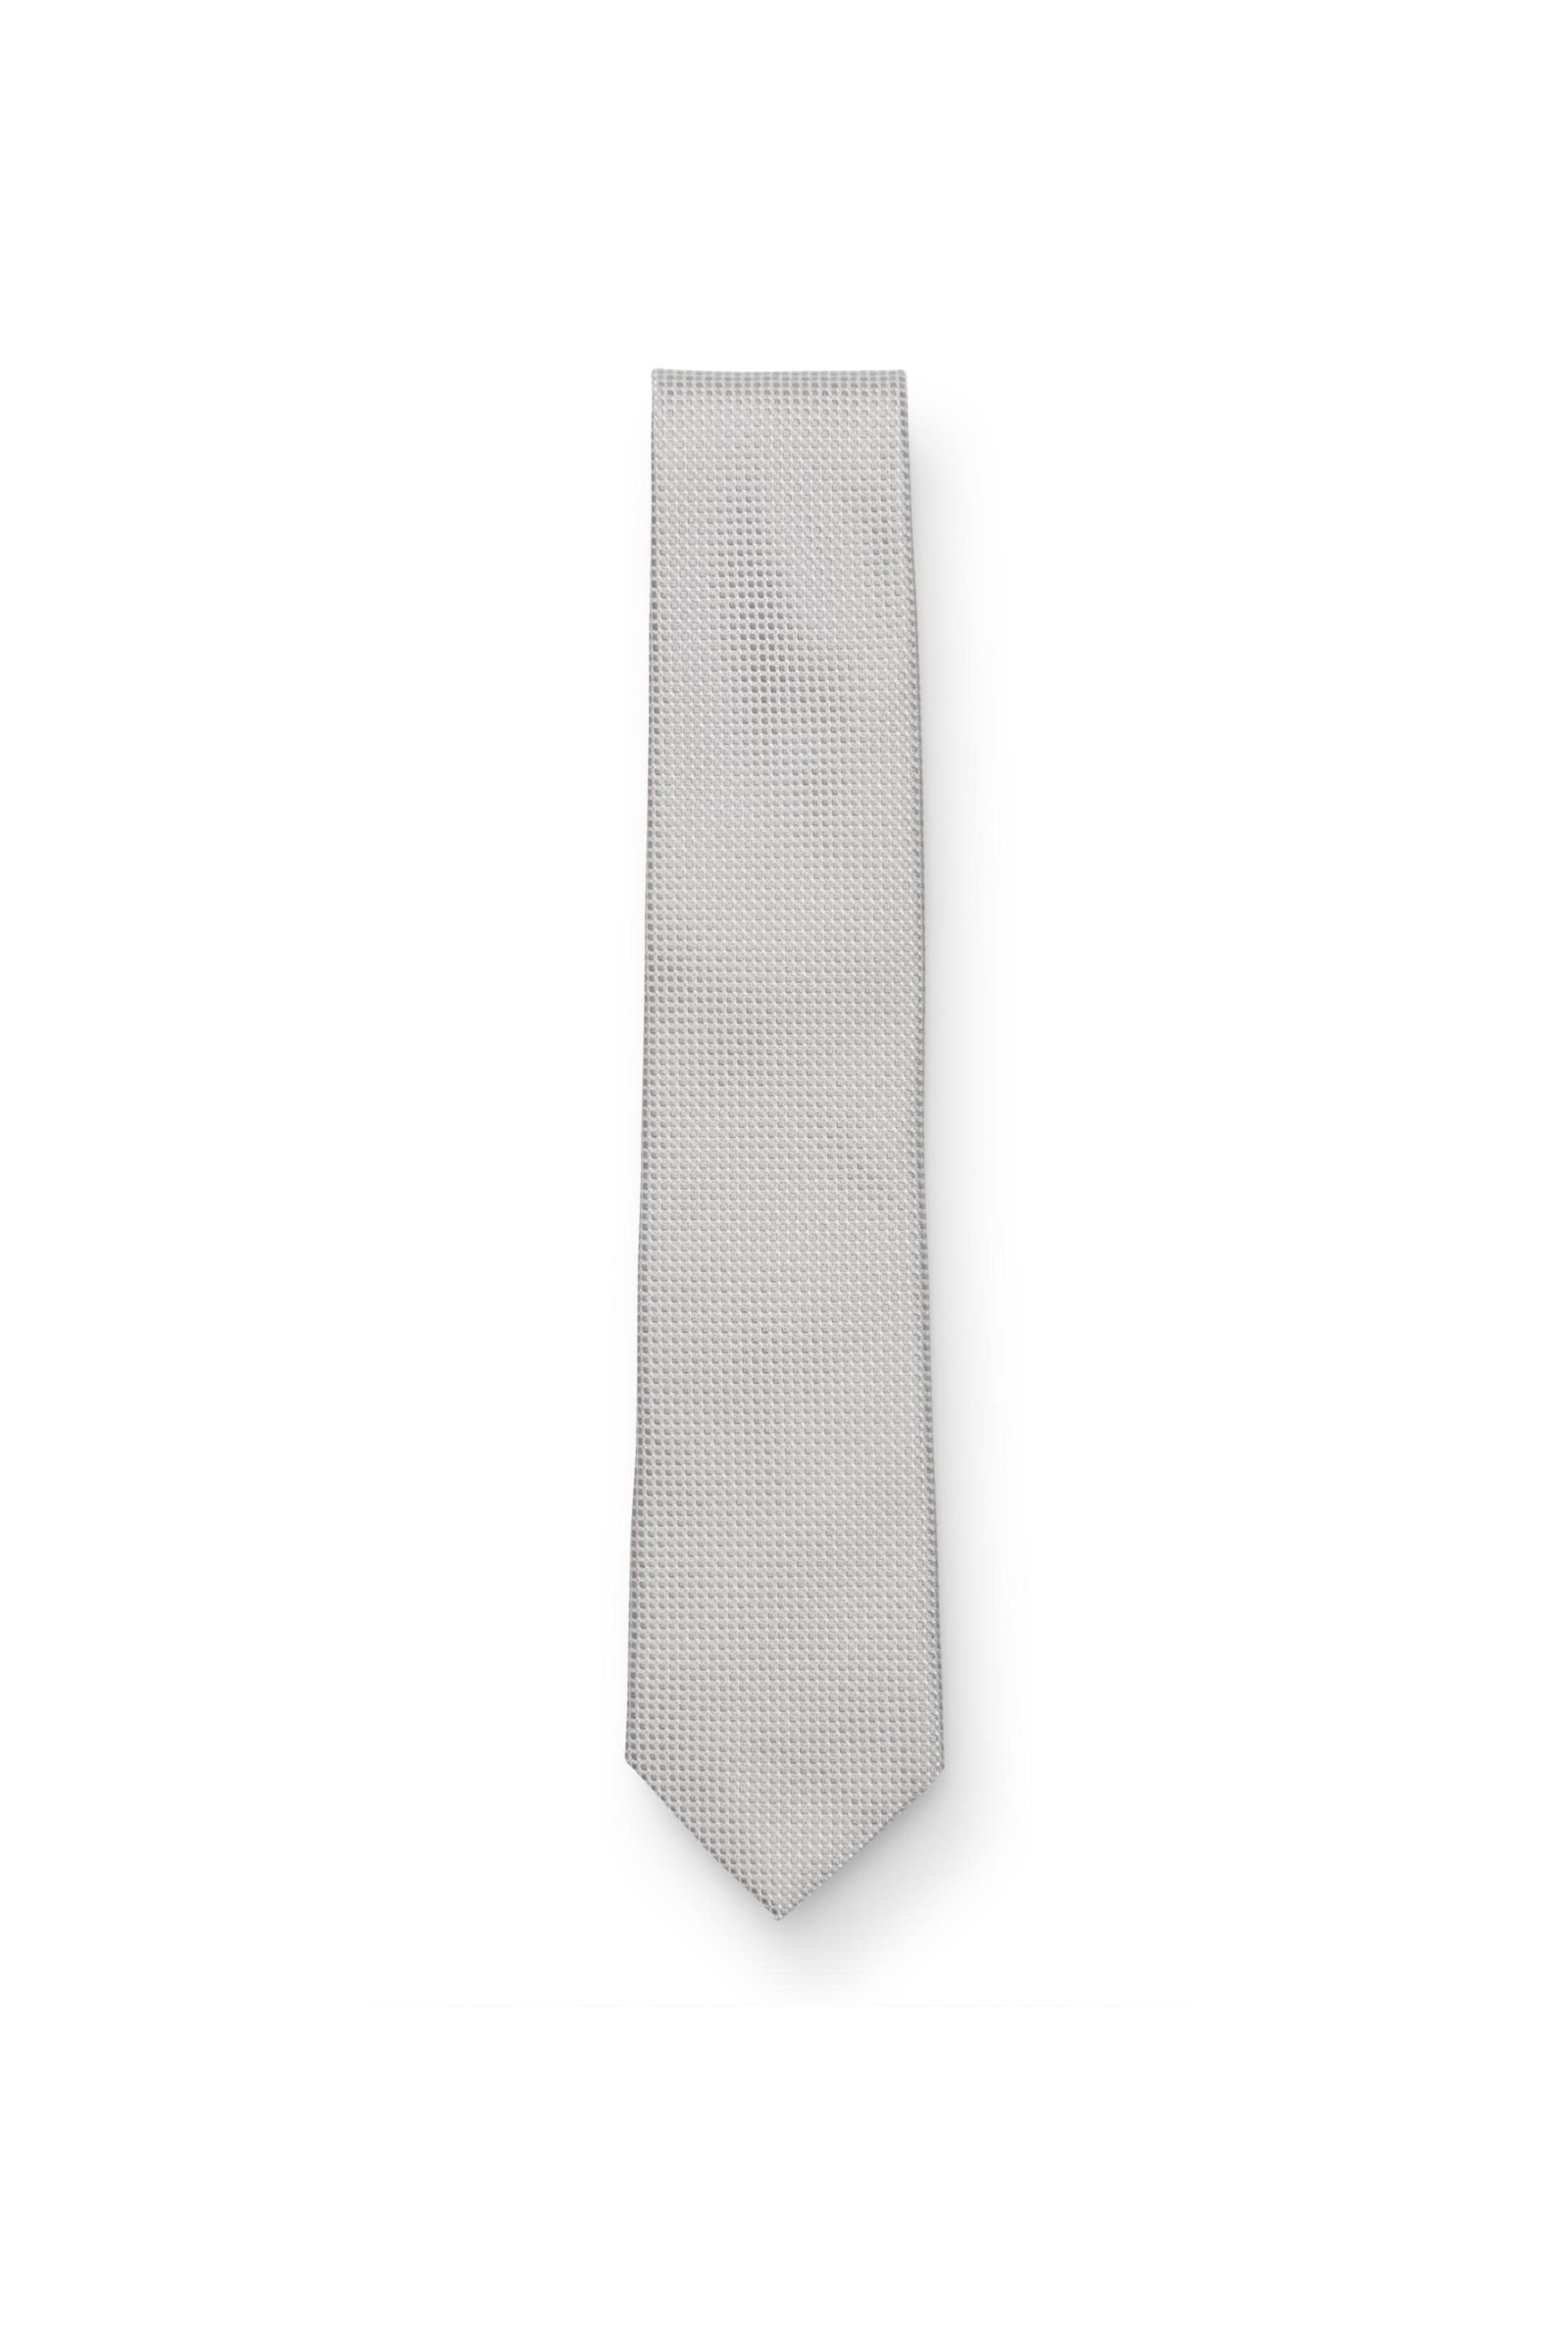 Silk tie light grey patterned